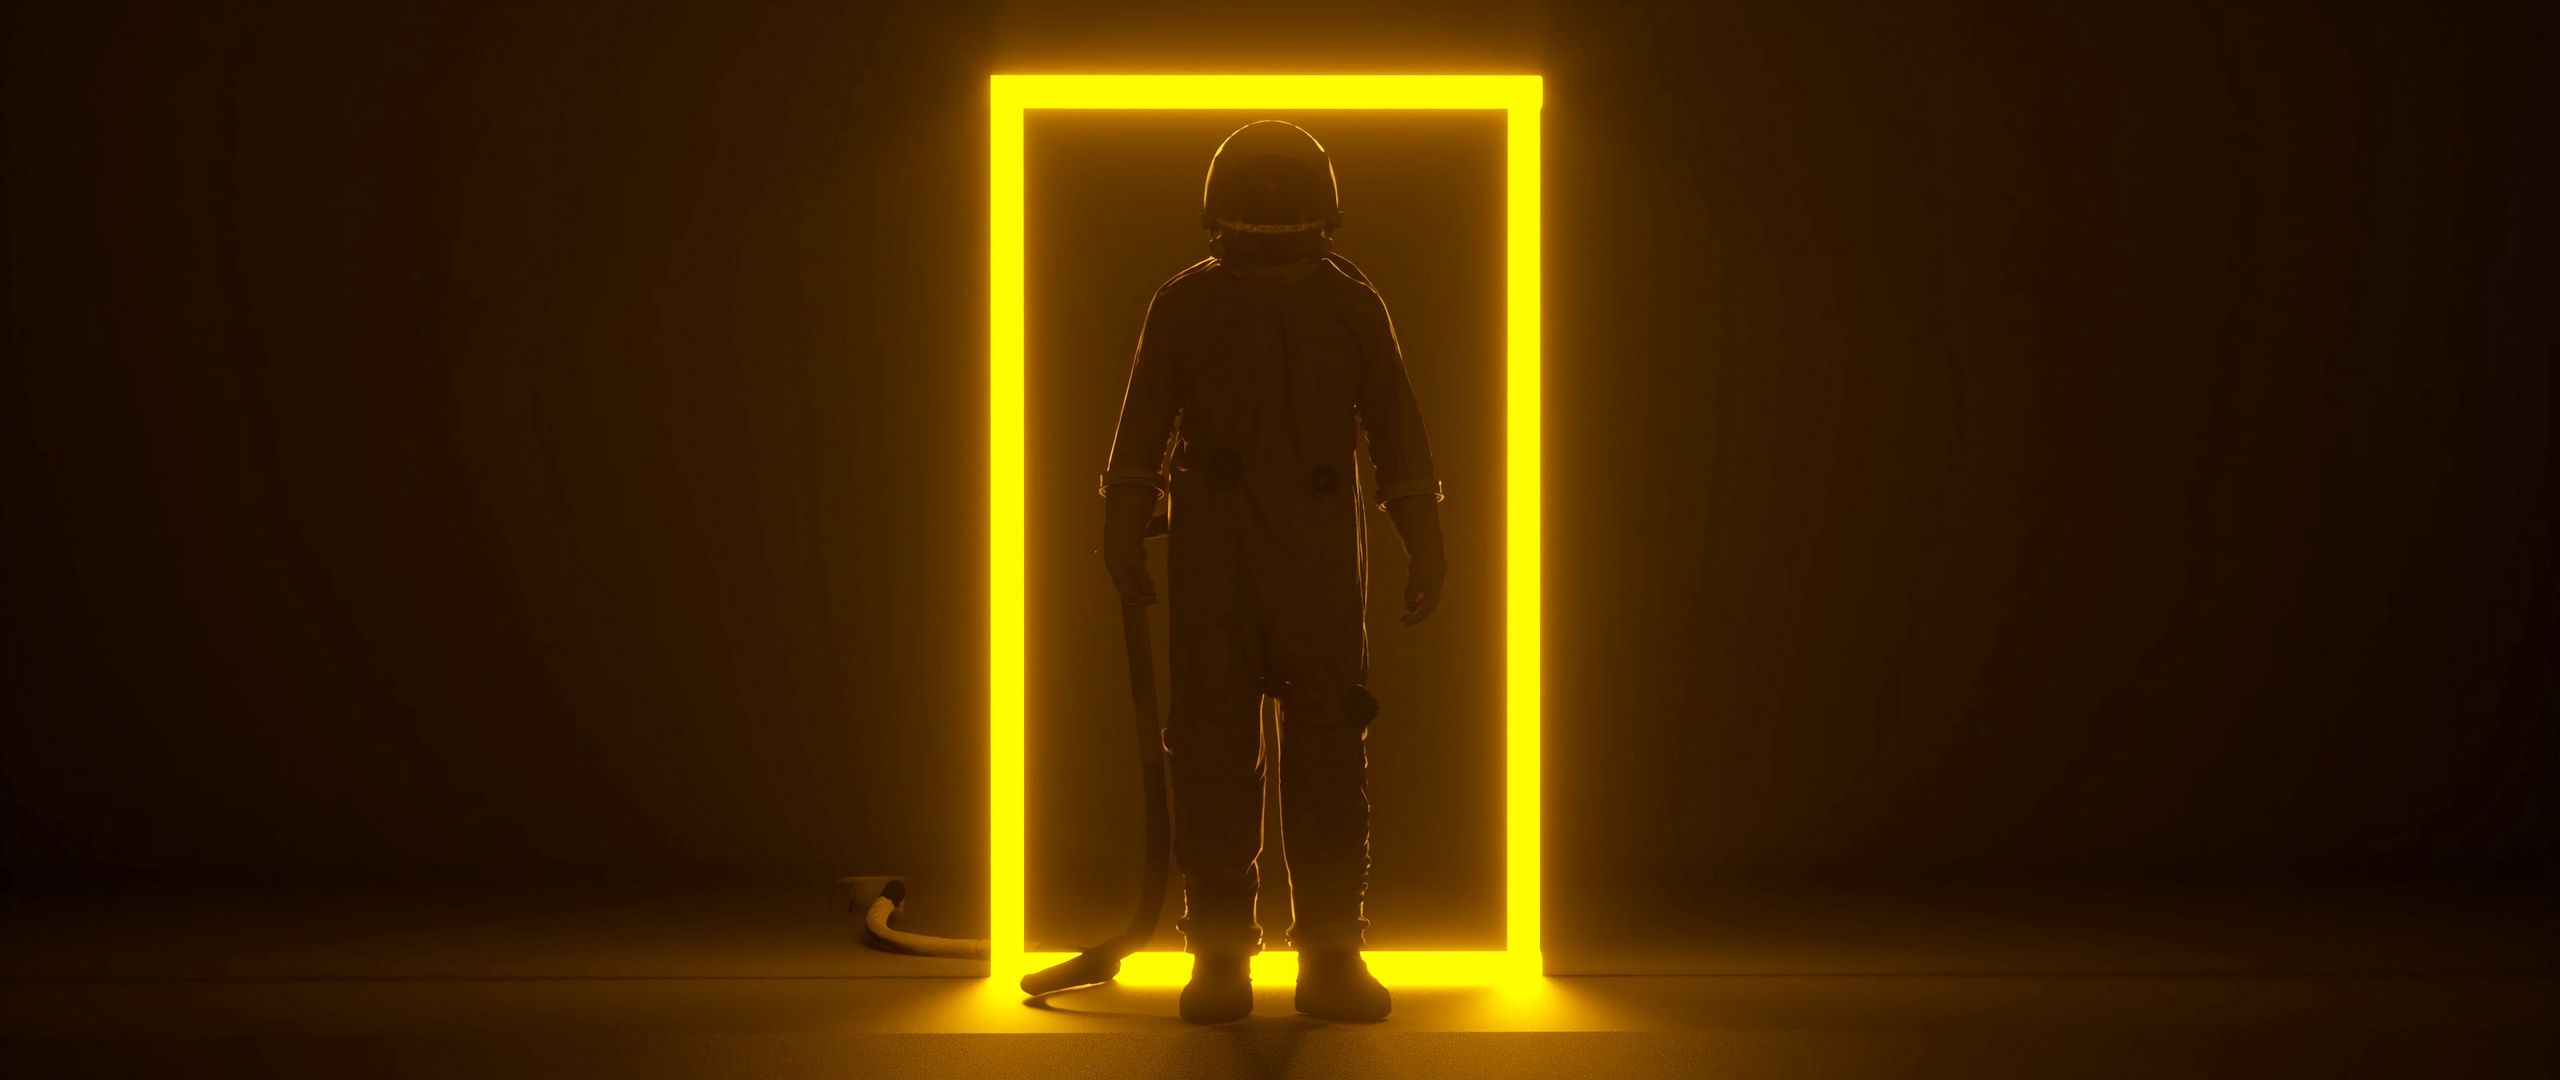 2560x1080 Wallpaper astronaut, portal, neon, frame, glow, dark